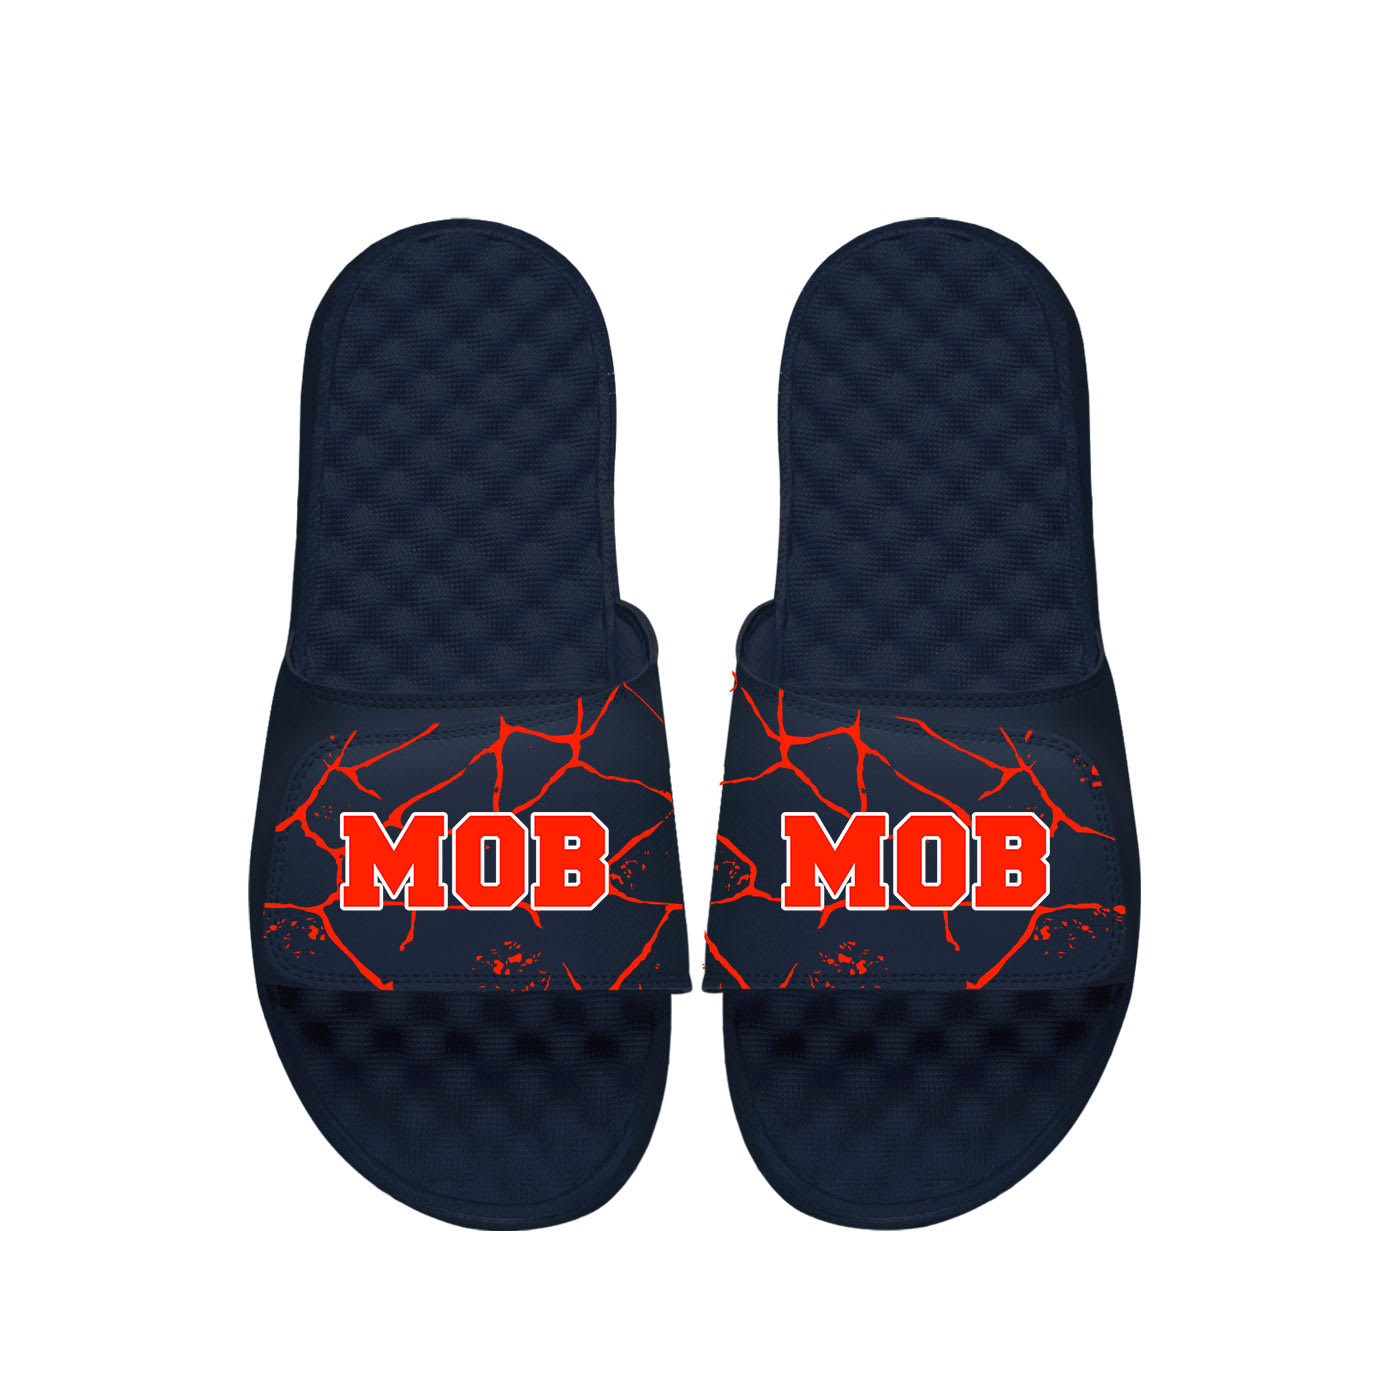 The Mob Slides